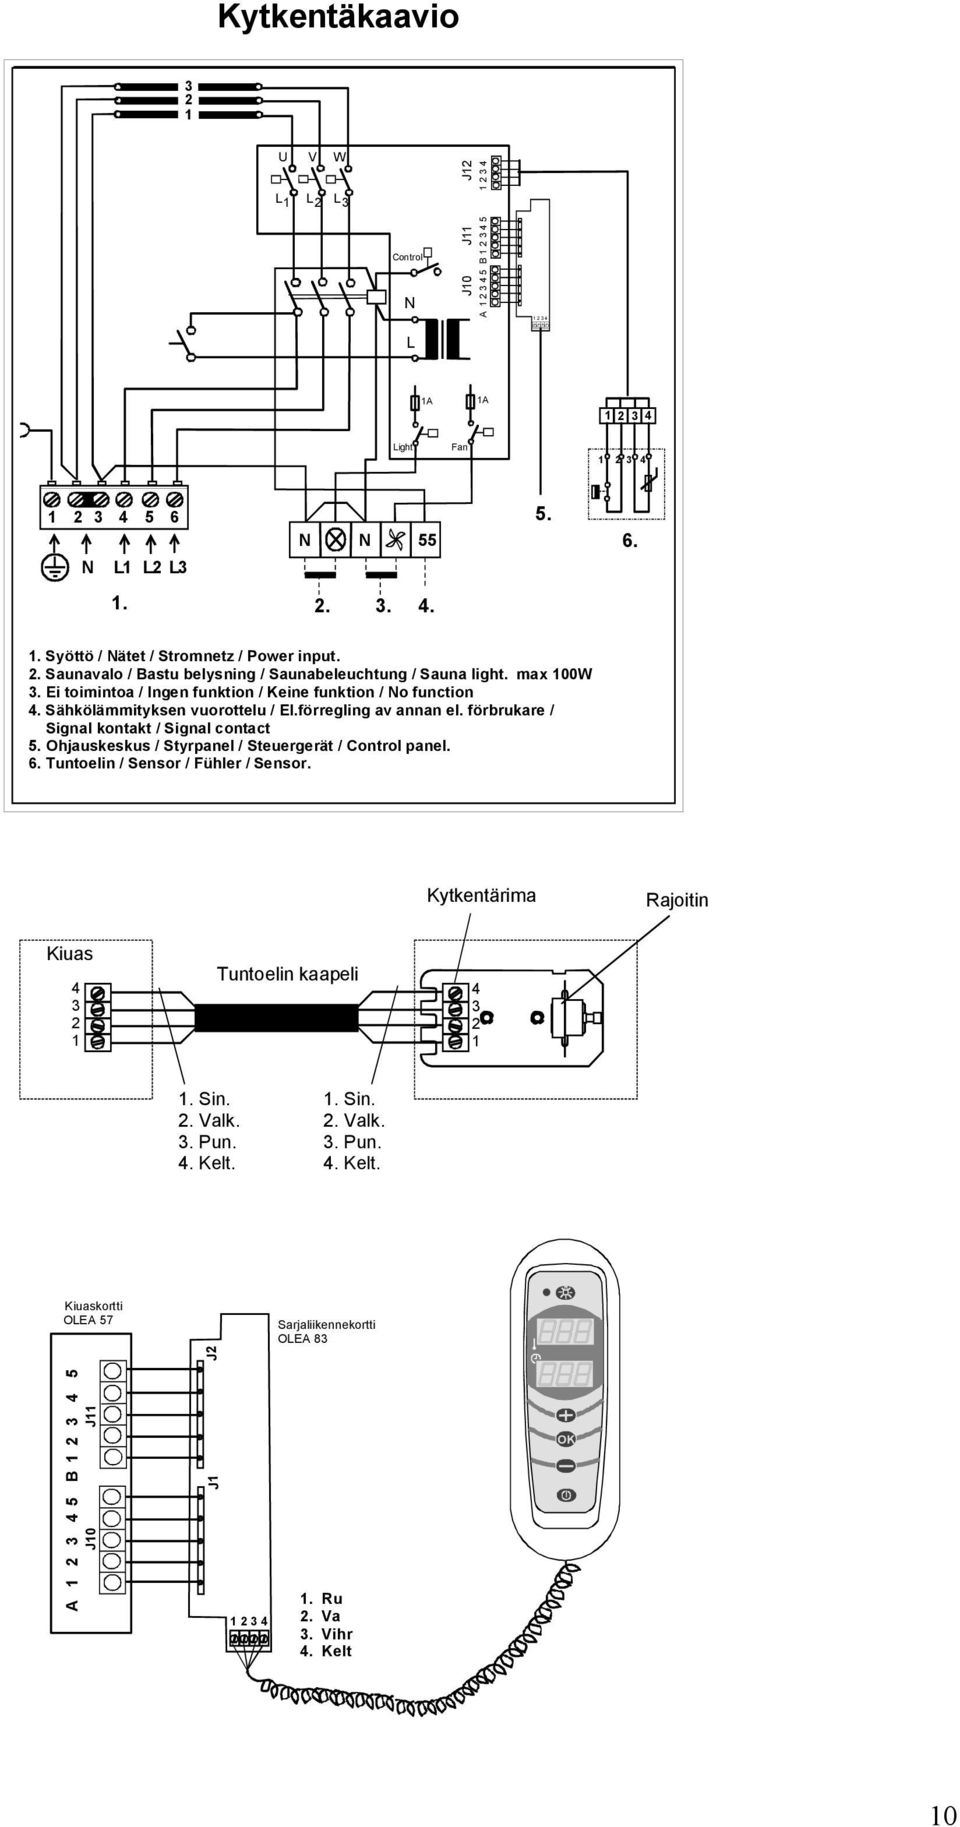 förbrukare / Signal kontakt / Signal contact 5. Ohjauskeskus / Styrpanel / Steuergerät / Control panel. 6. Tuntoelin / Sensor / Fühler / Sensor.